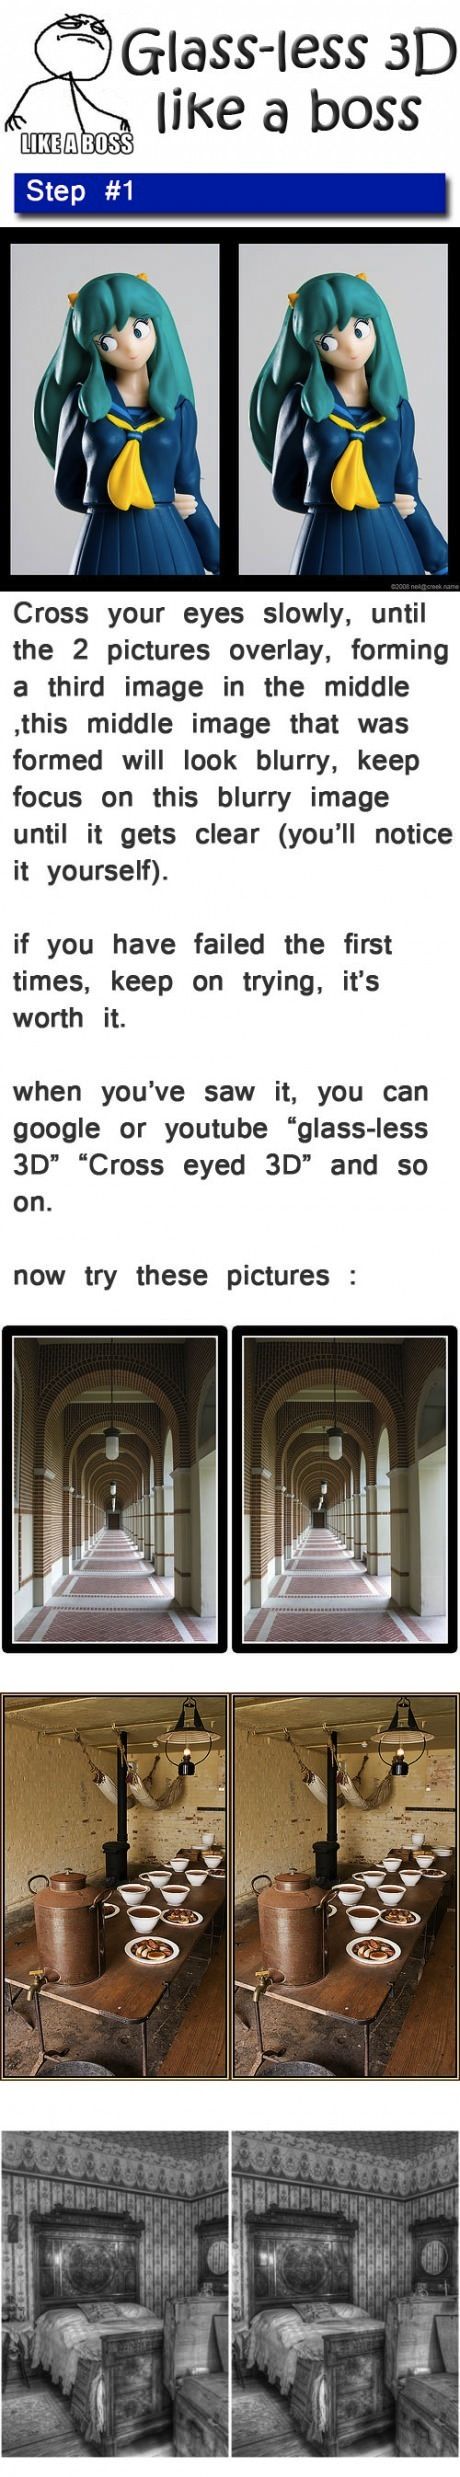 Glass-less 3D.